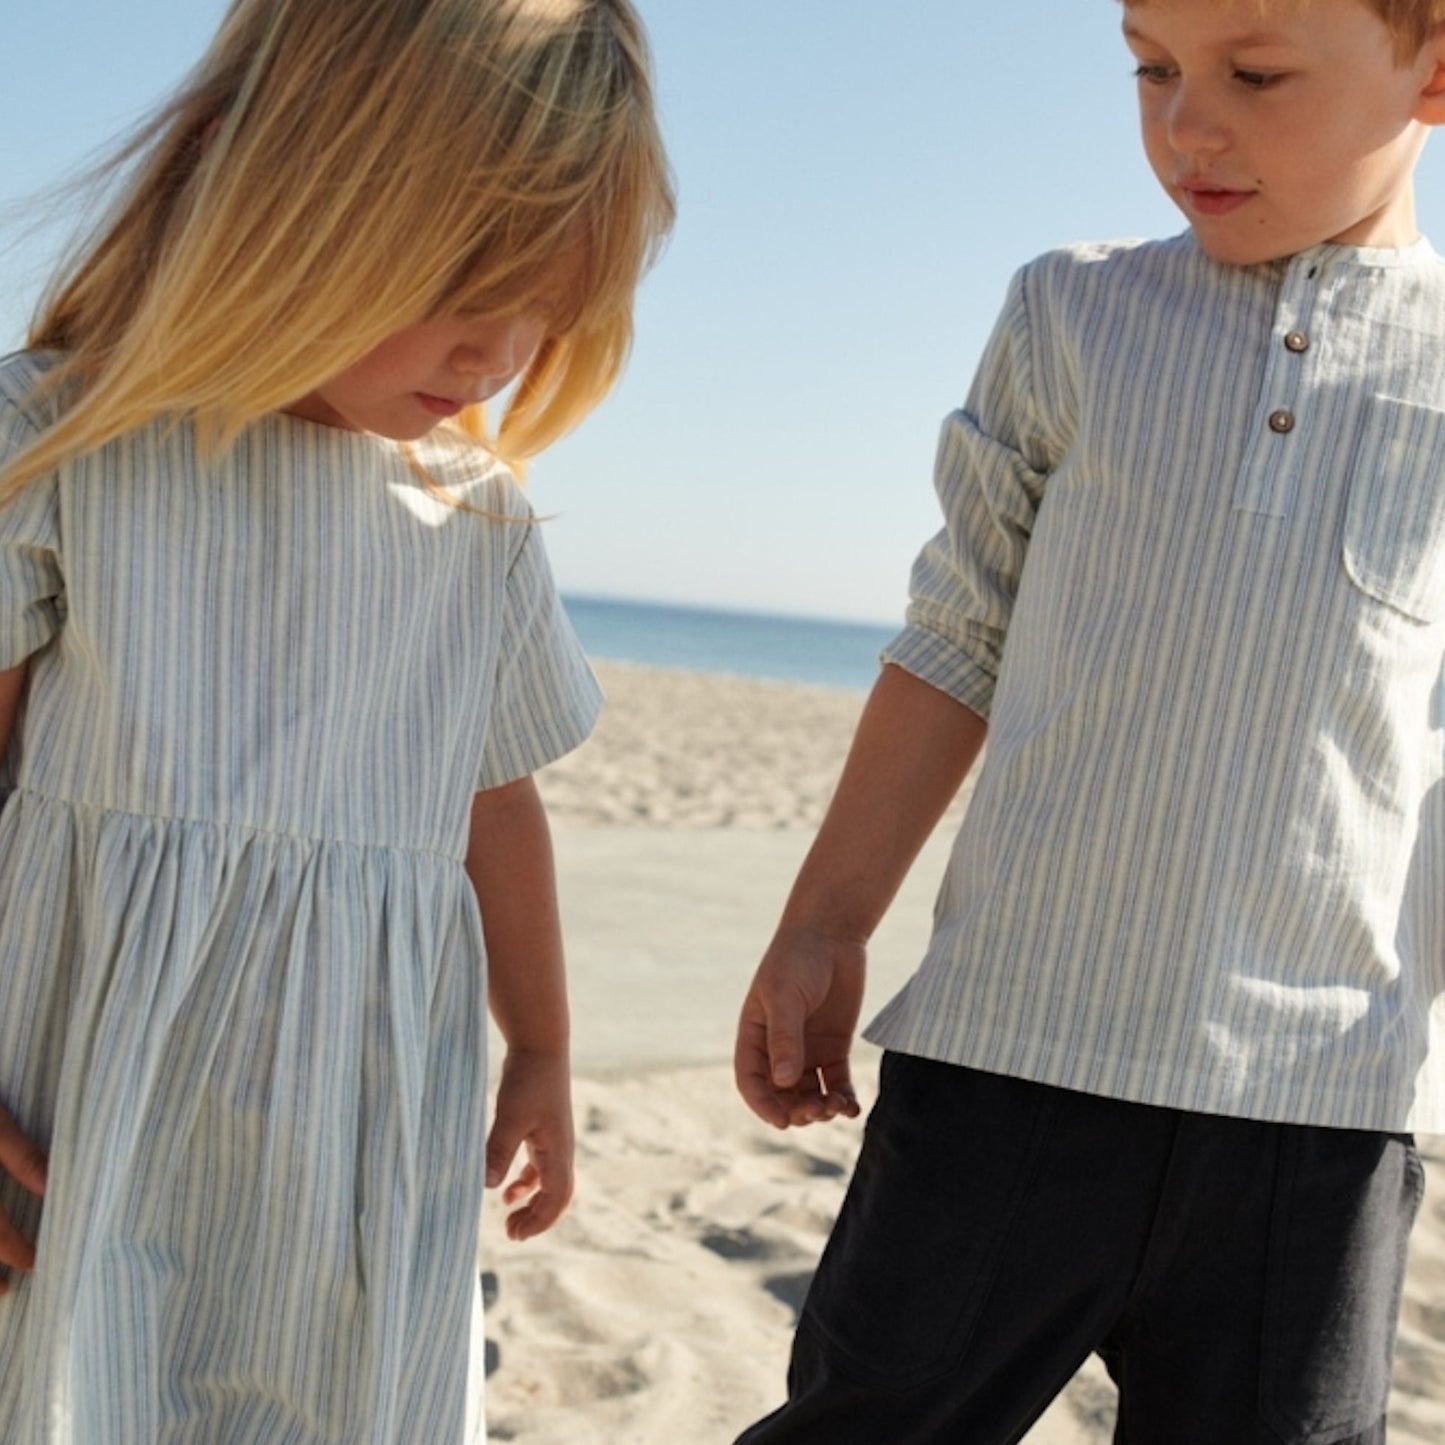 Wheat 'Esmaralda' S/S Children's Dress - Aqua Stripe